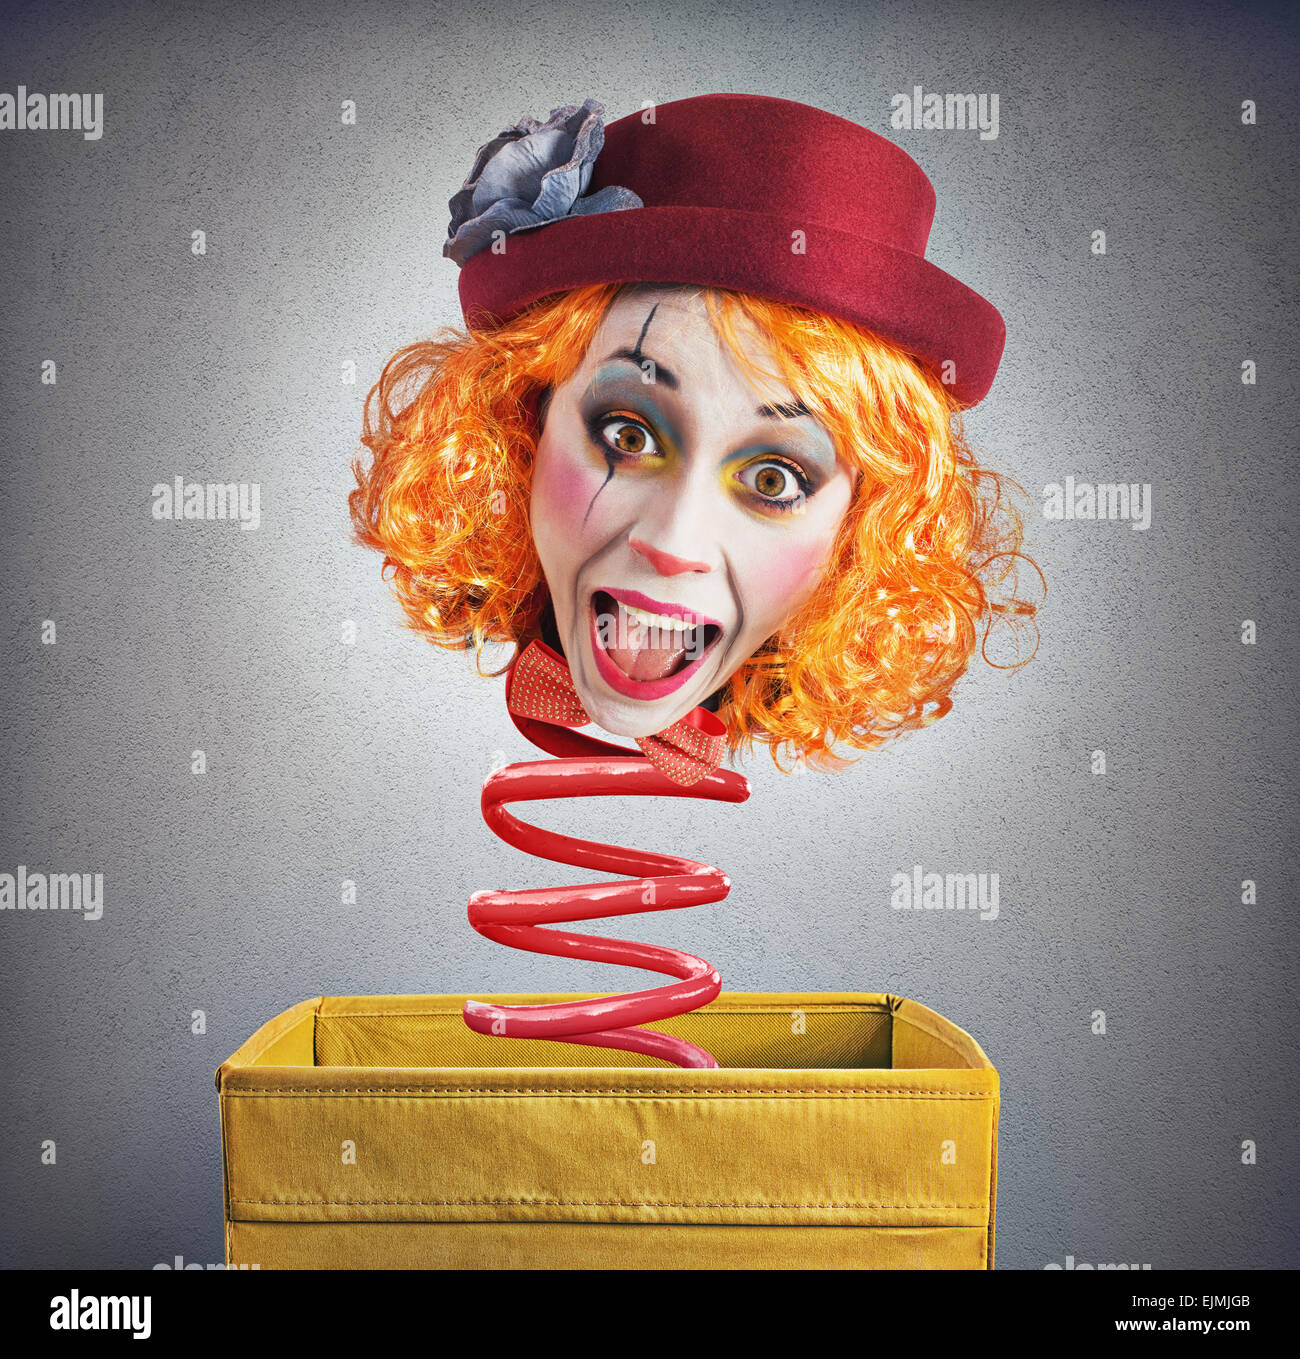 Magic box clown Stock Photo - Alamy